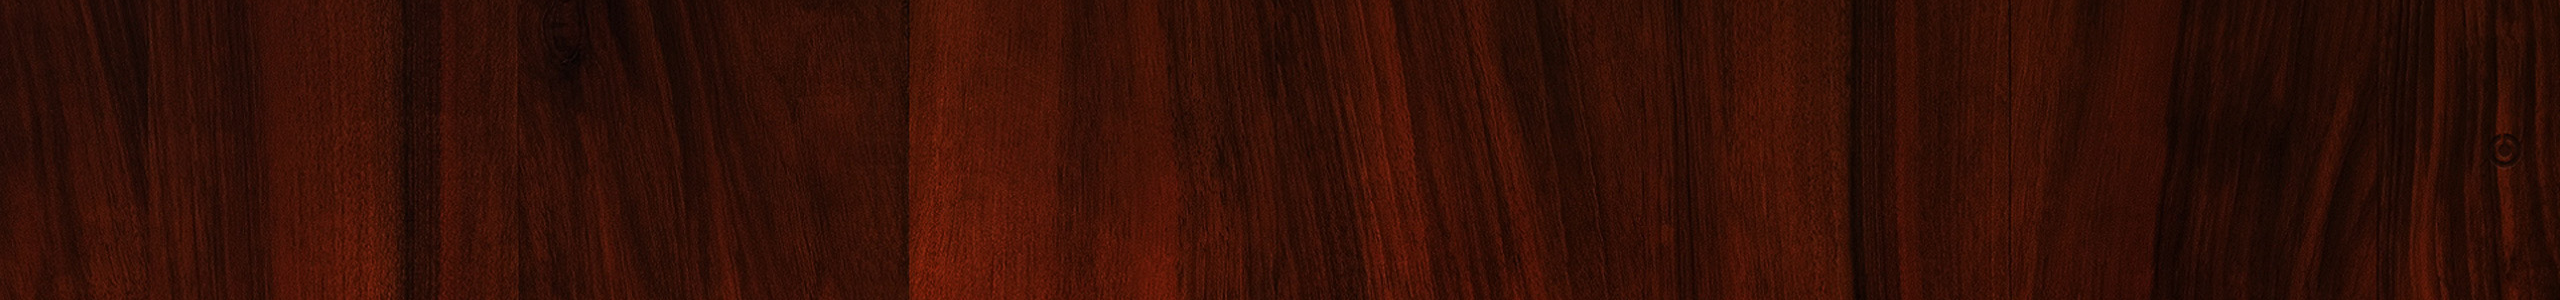 Wood-grain-wallpaper-01-2560x300